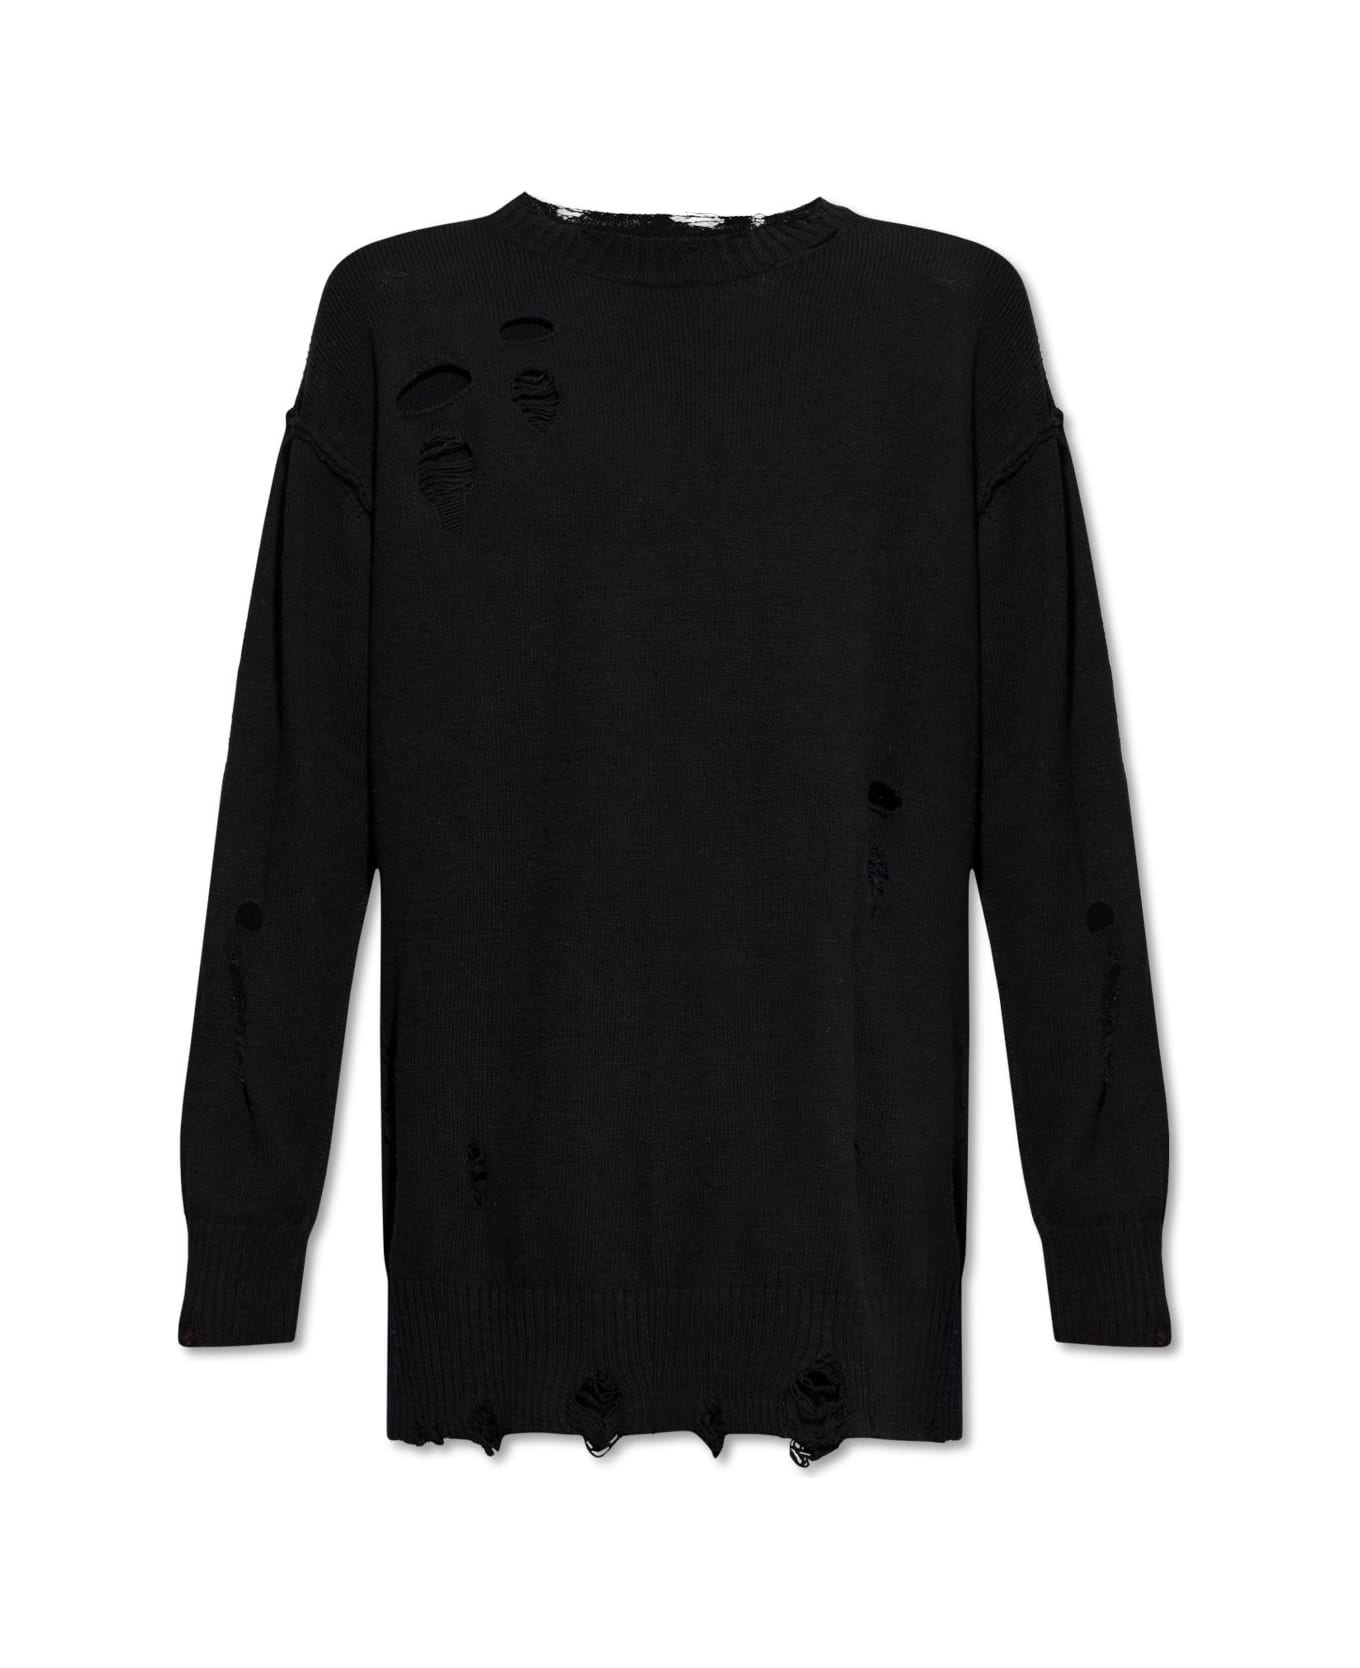 Yohji Yamamoto Sweater With A Vintage Effect - Black